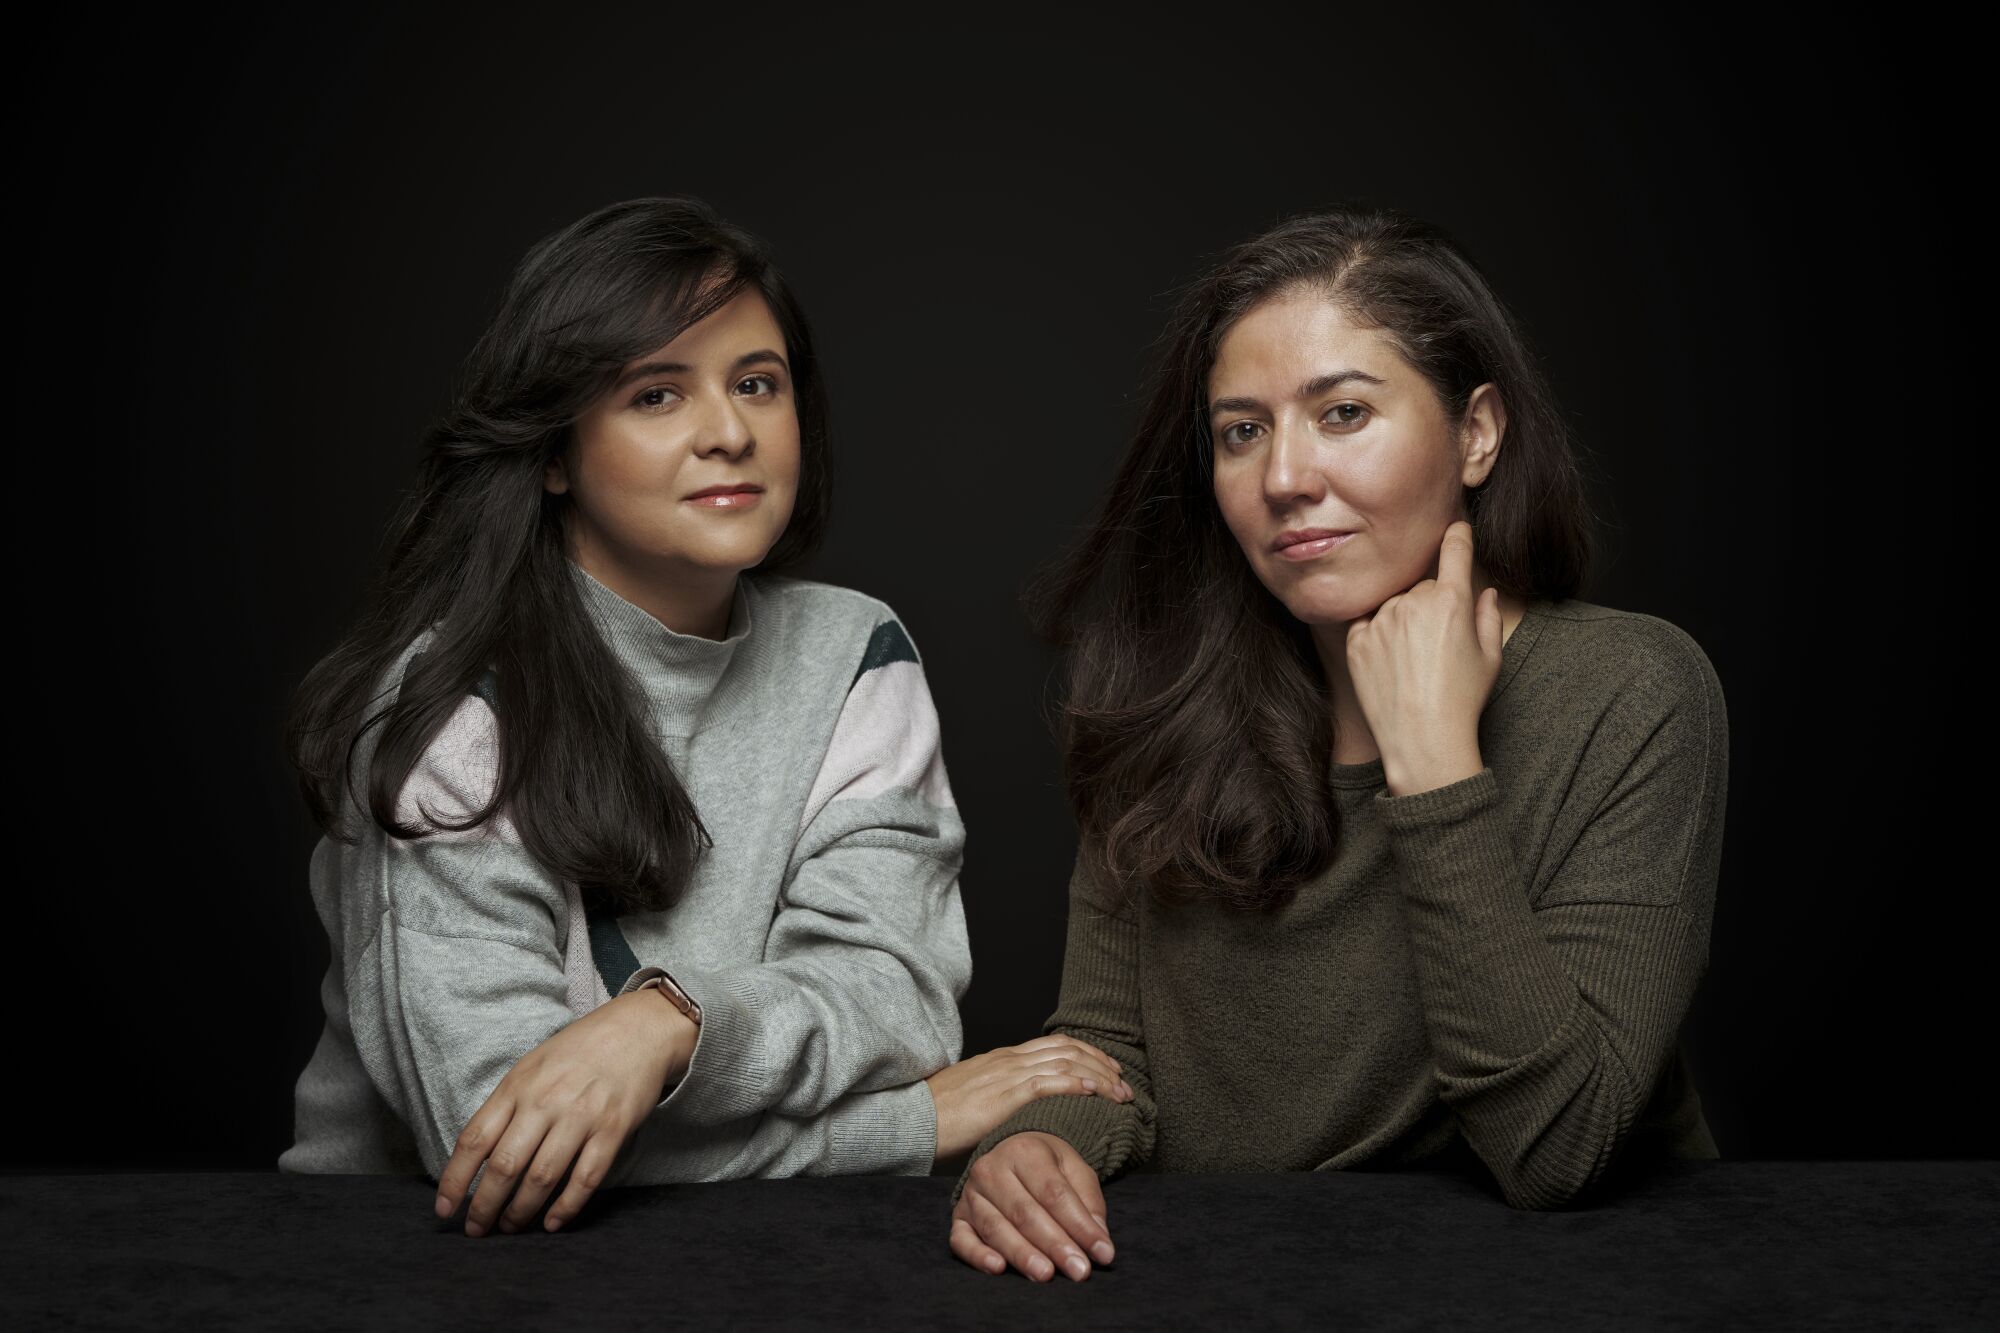 Filmmakers Astrid Rondero, left, and Fernanda Valadez